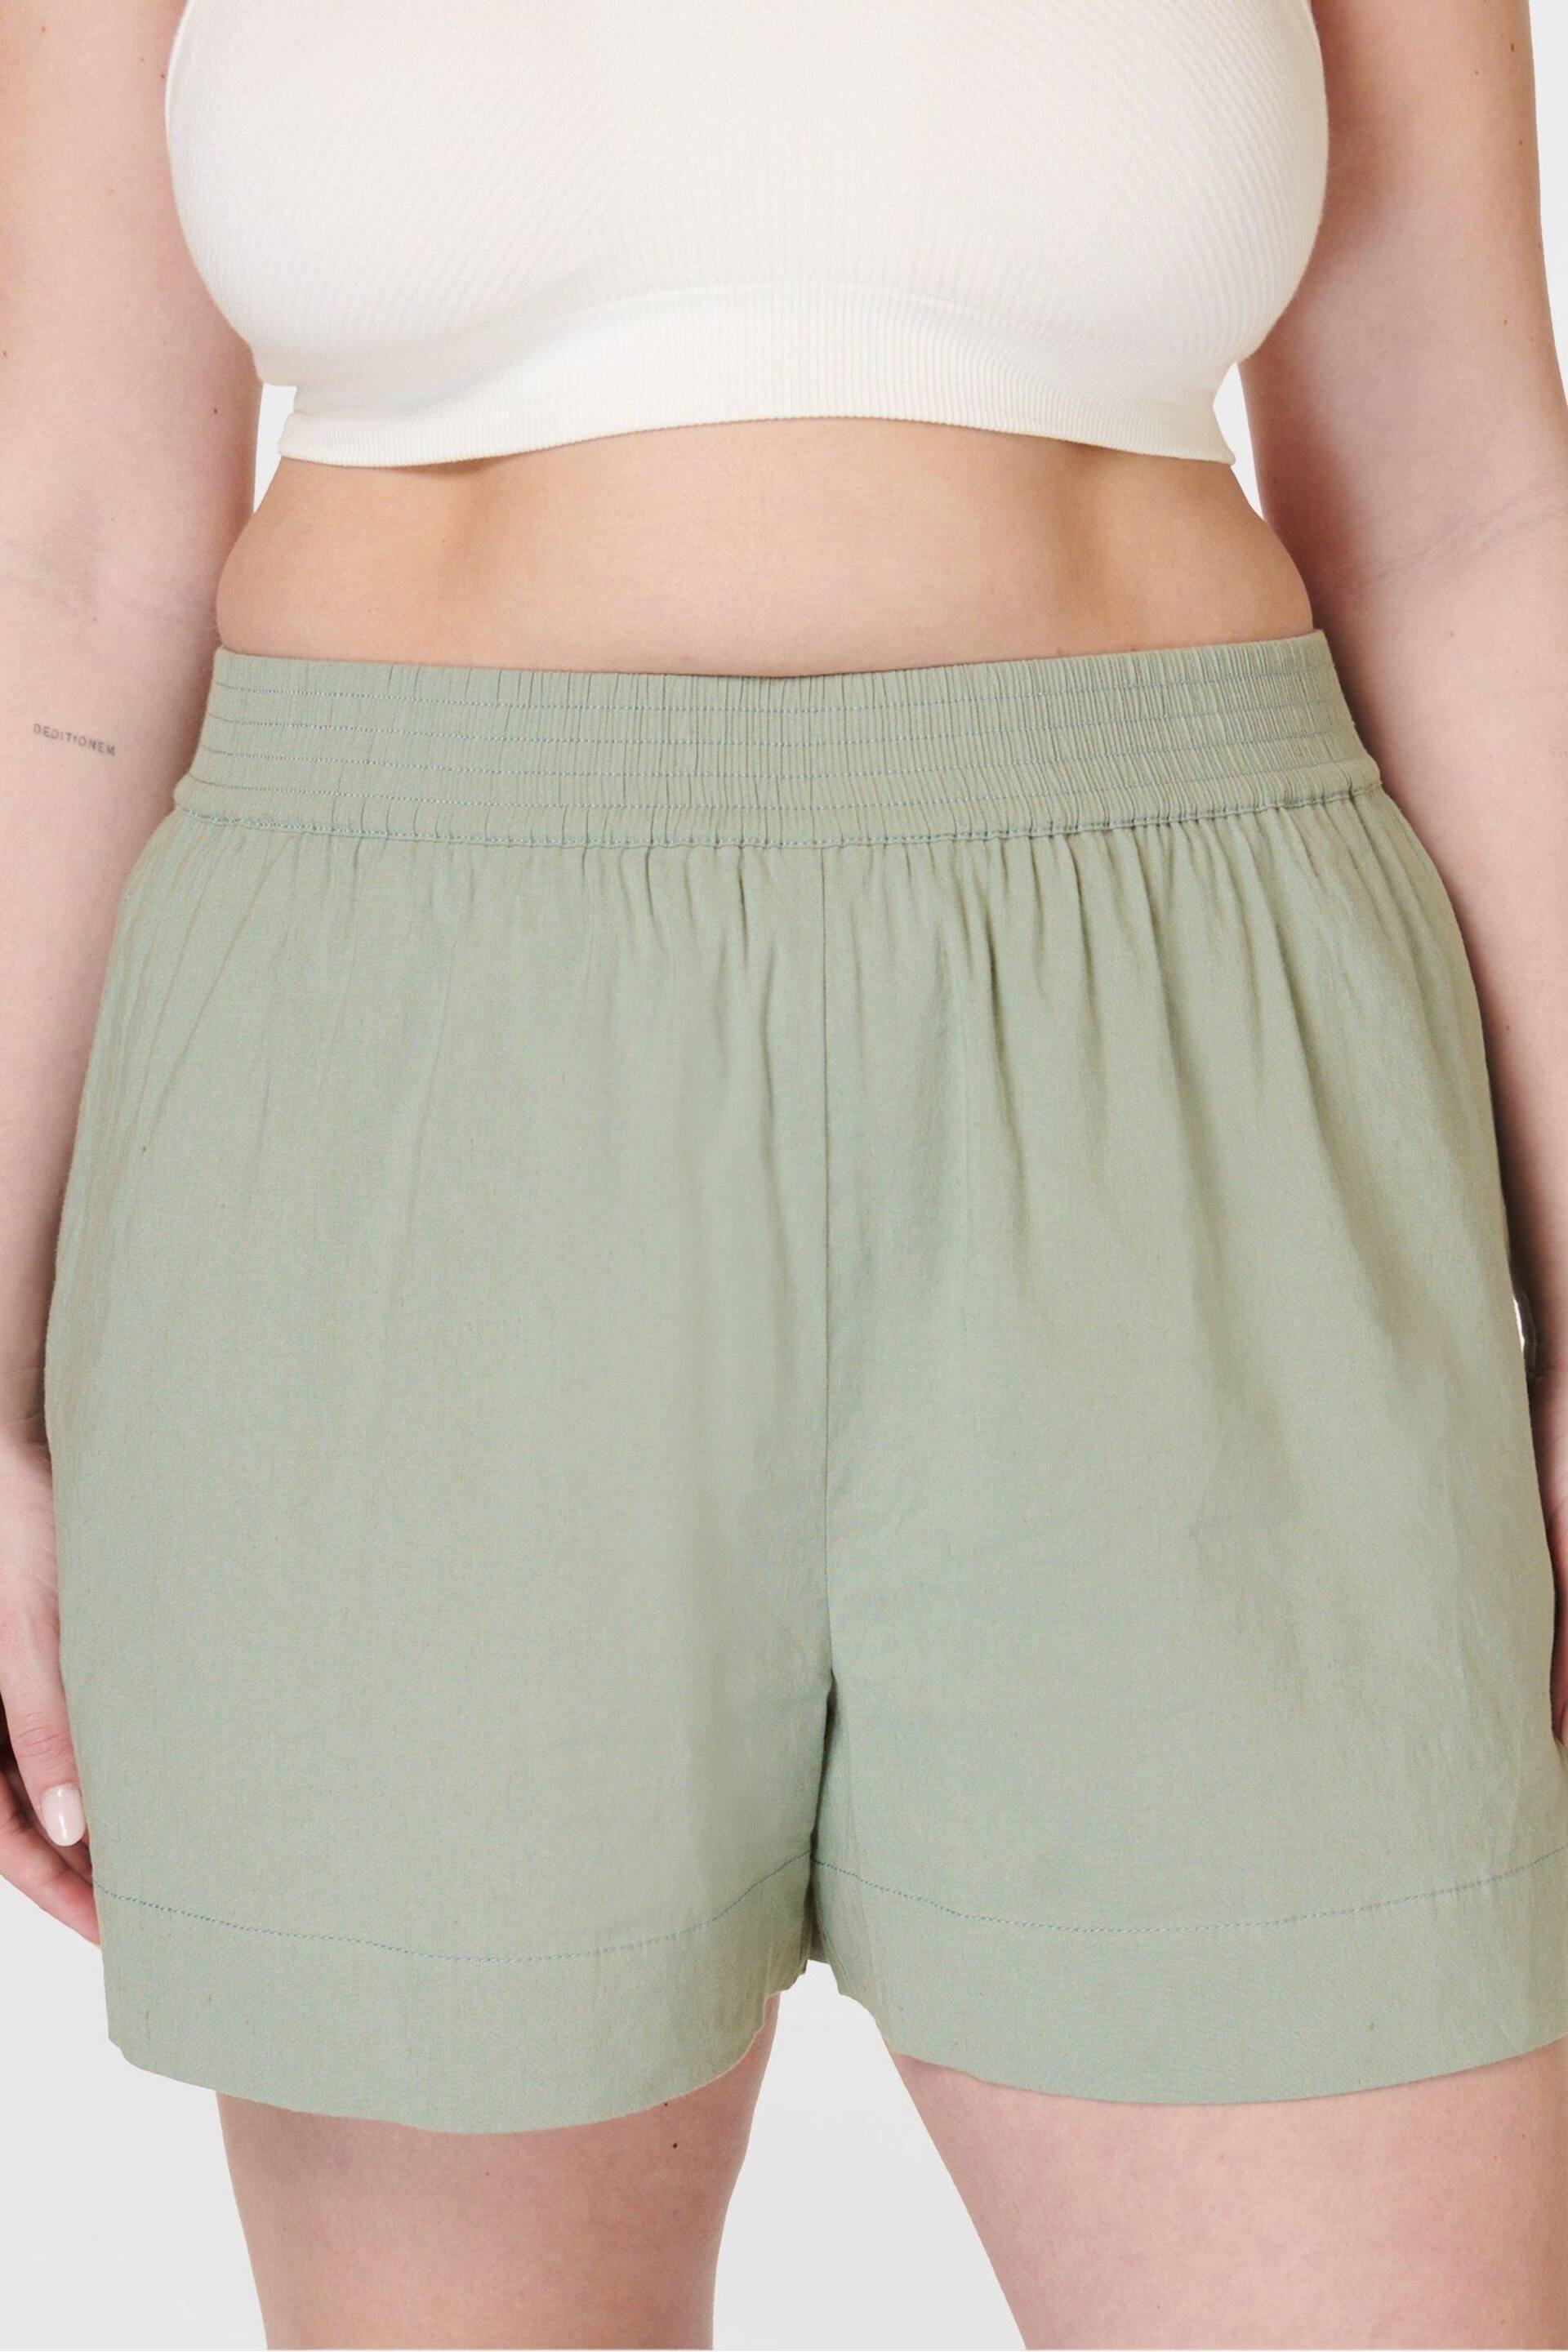 Sweaty Betty Savannah Green Summer Stretch Linen Shorts - Image 1 of 6